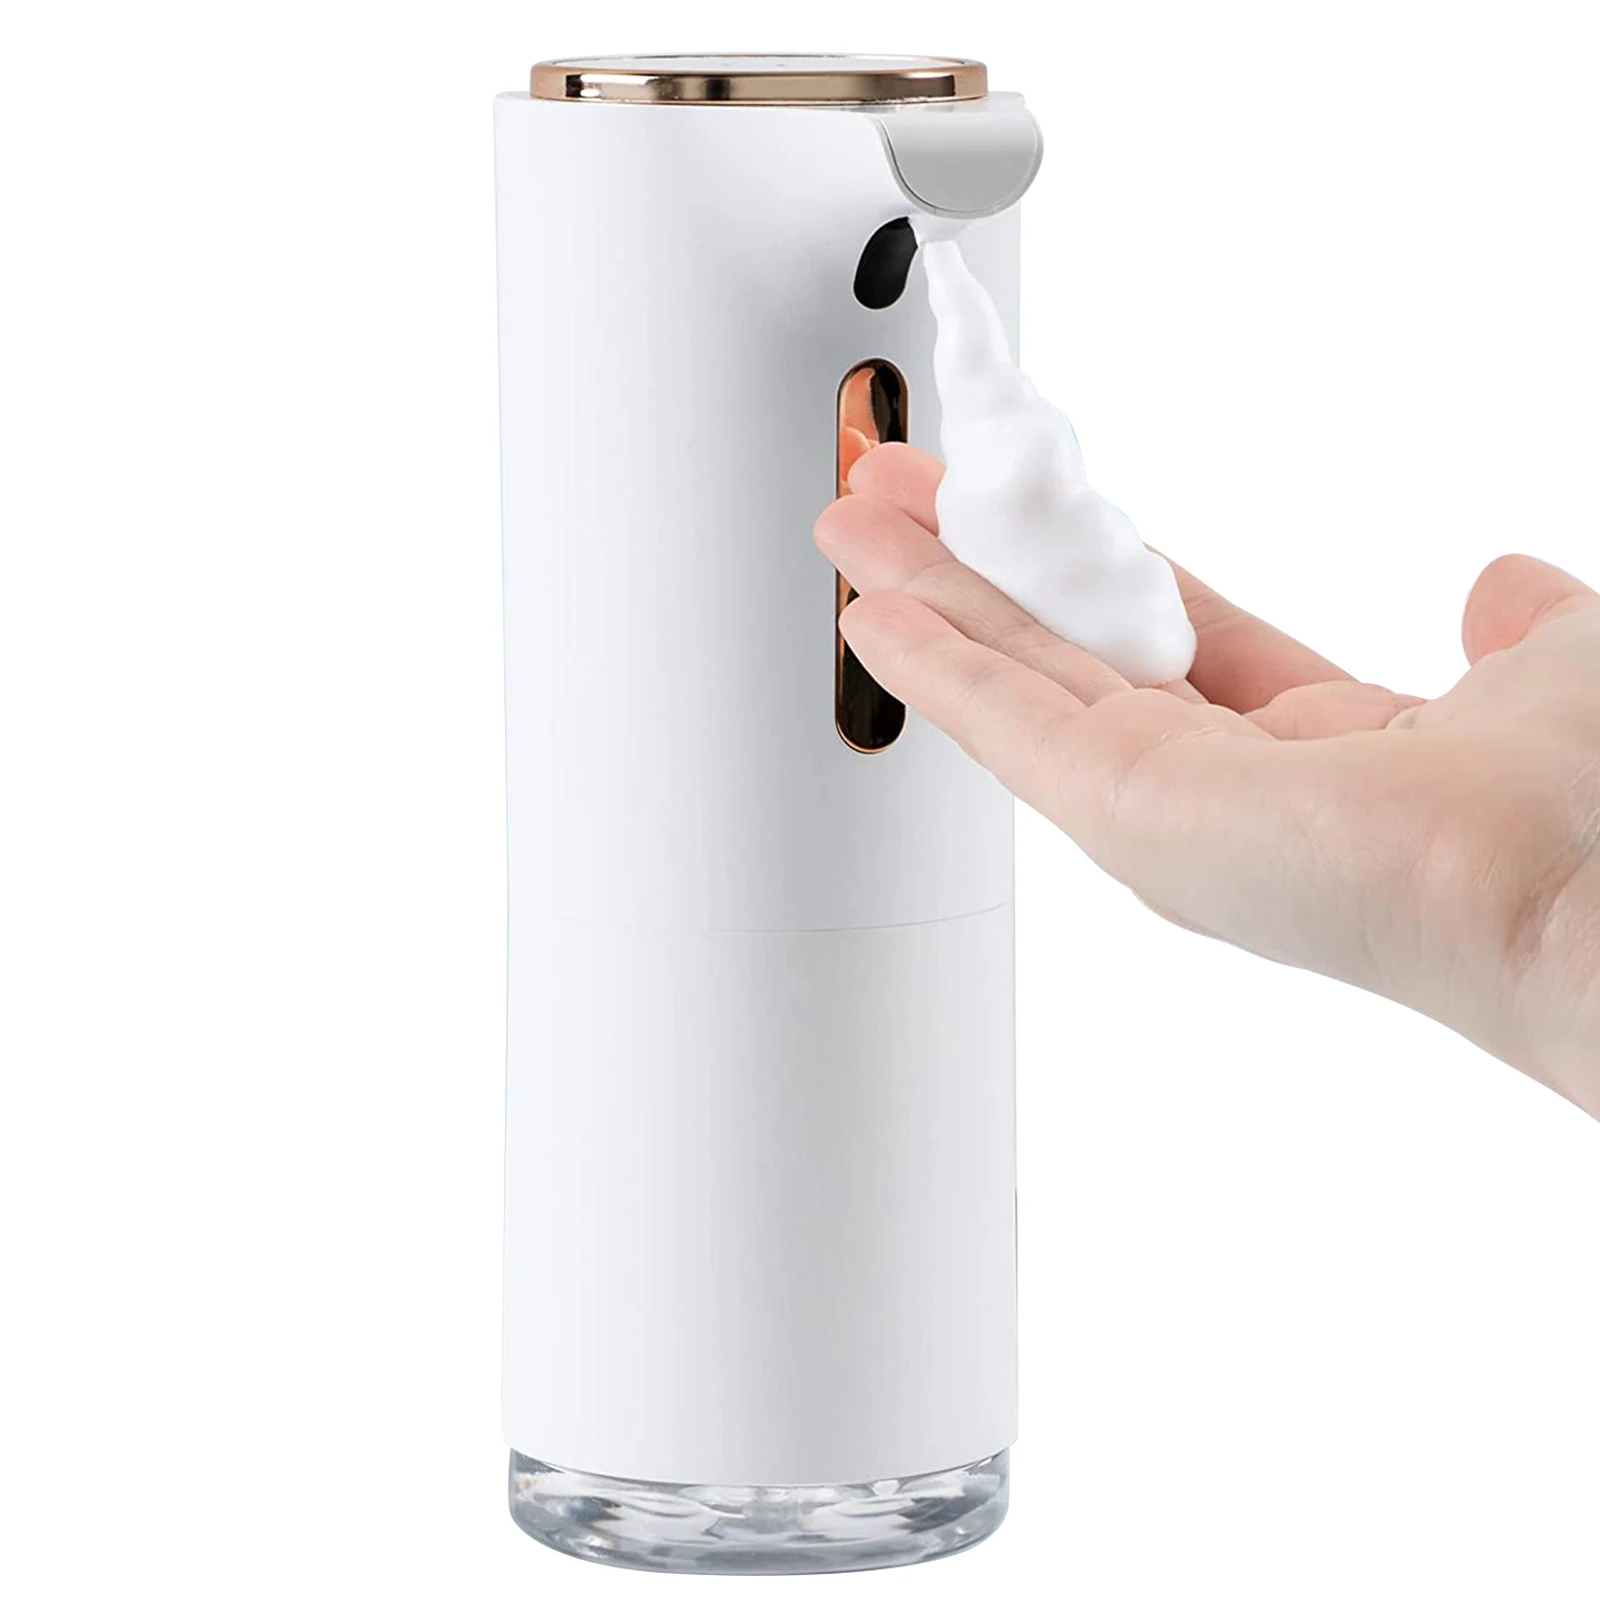 

Automatic Soap Dispenser, Touchless Hand Sanitizer Dispenser with IR Sensor Battery Operated Foam Soap Dispenser Adjustable Wat